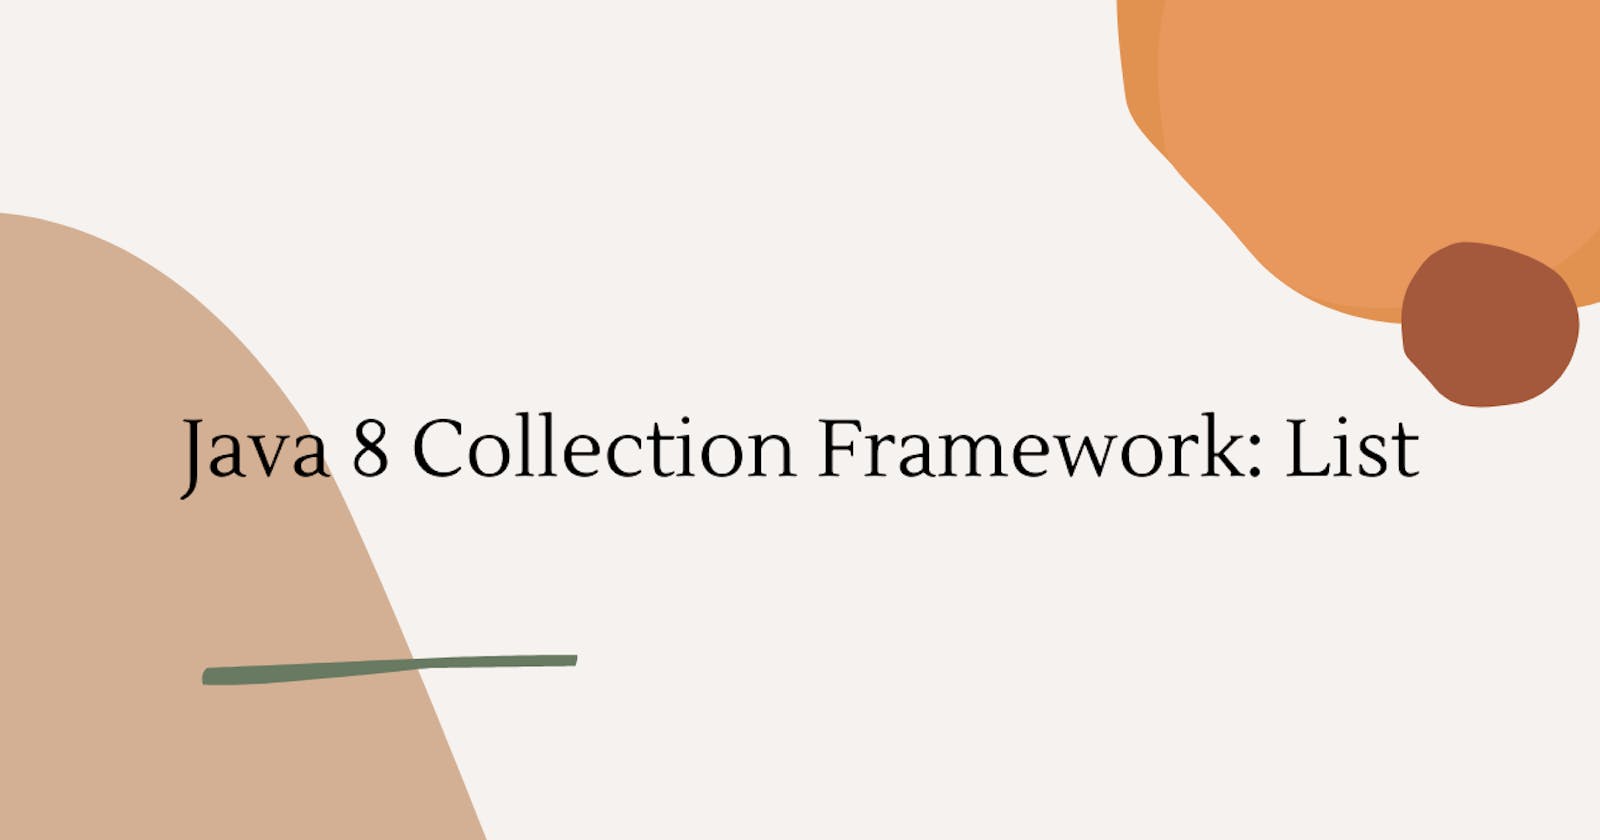 Java 8 Collection Framework: List